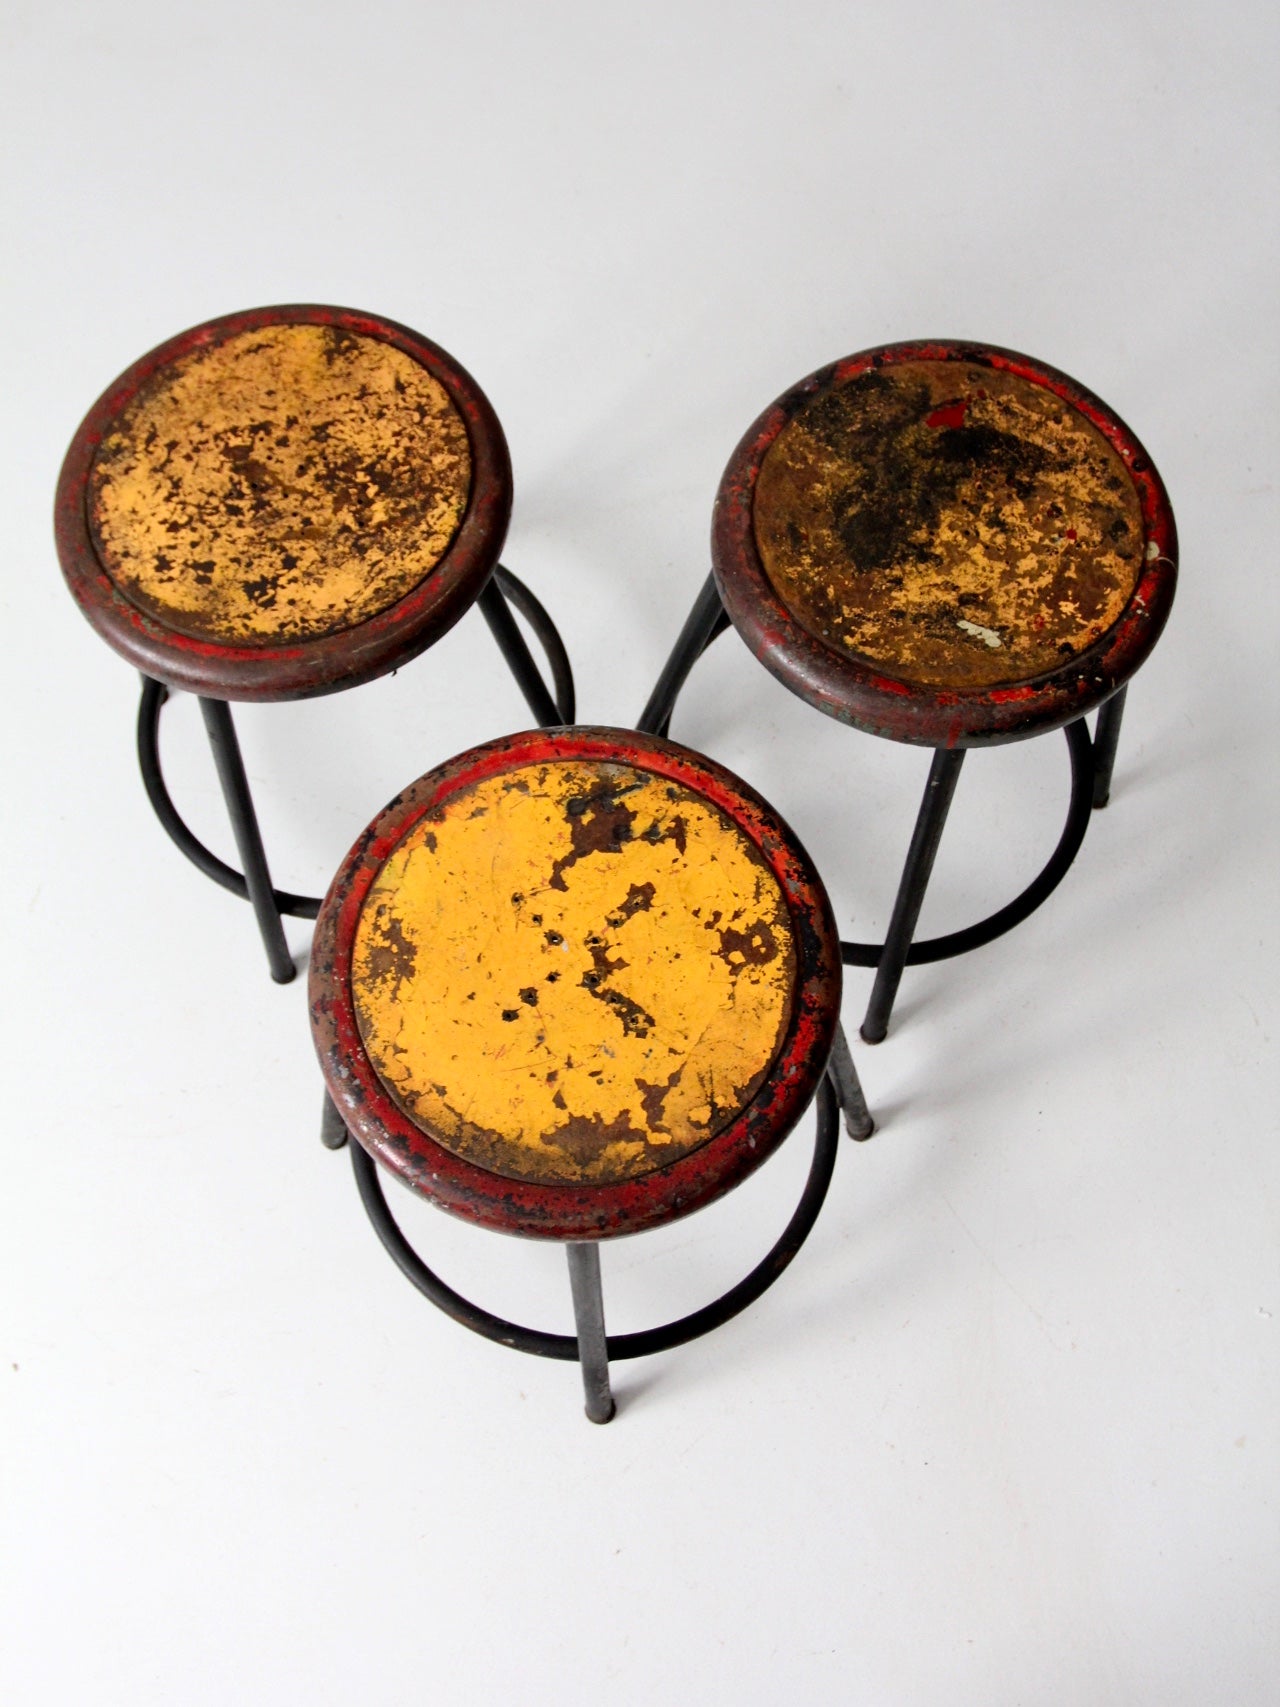 vintage industrial stools - set of 3